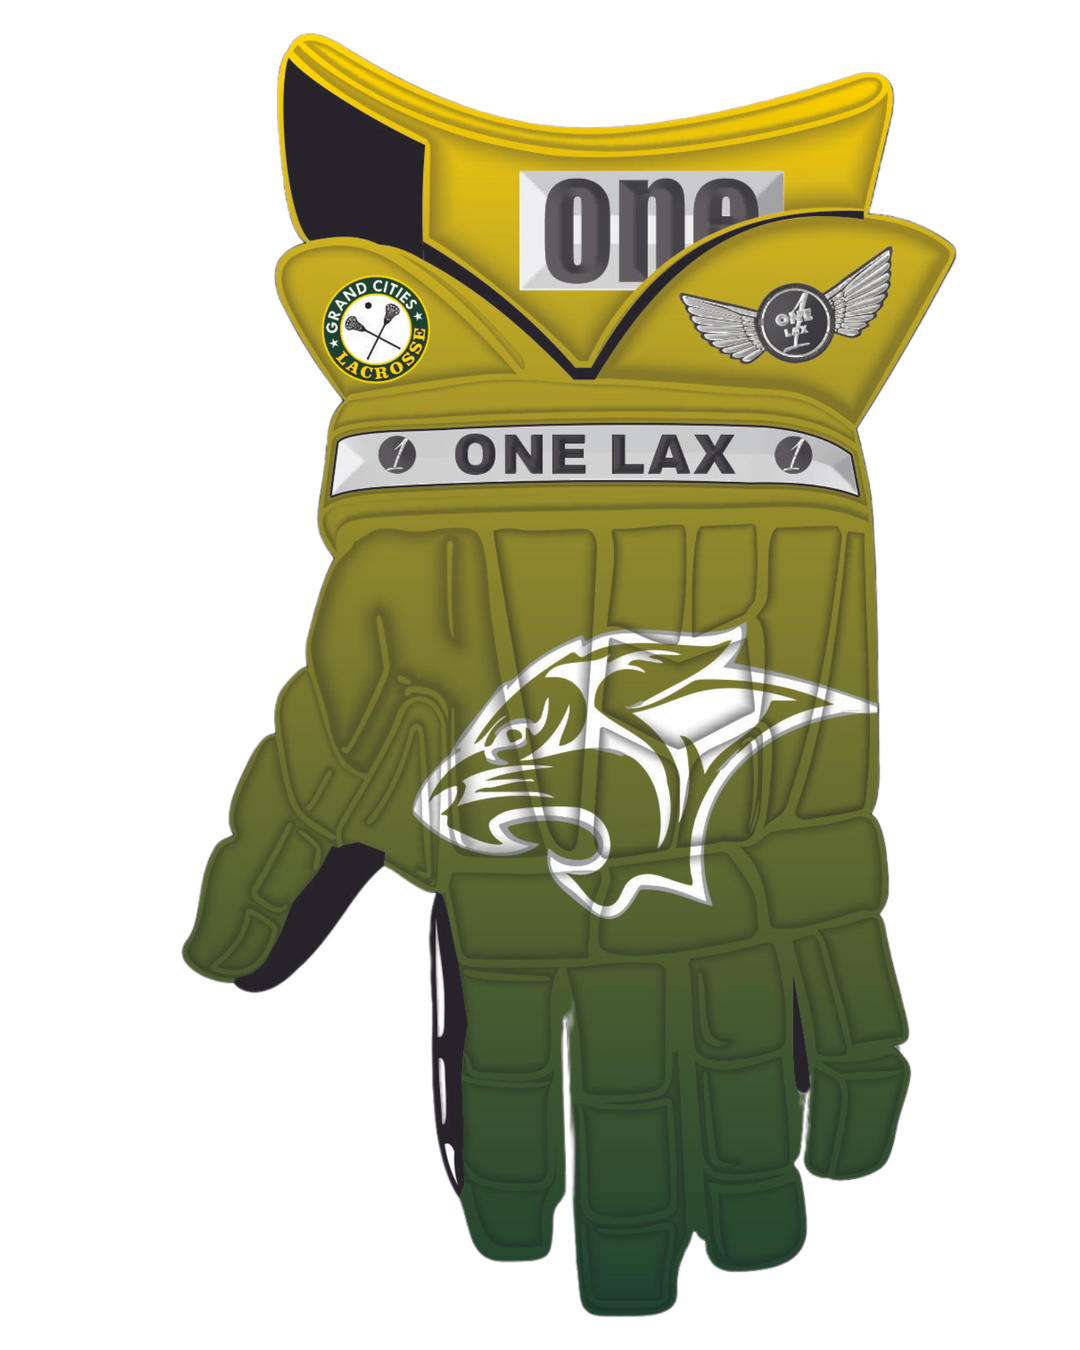 Grand Cities Lacrosse Team | HYBRID Box & Field Lacrosse Gloves - One Lax